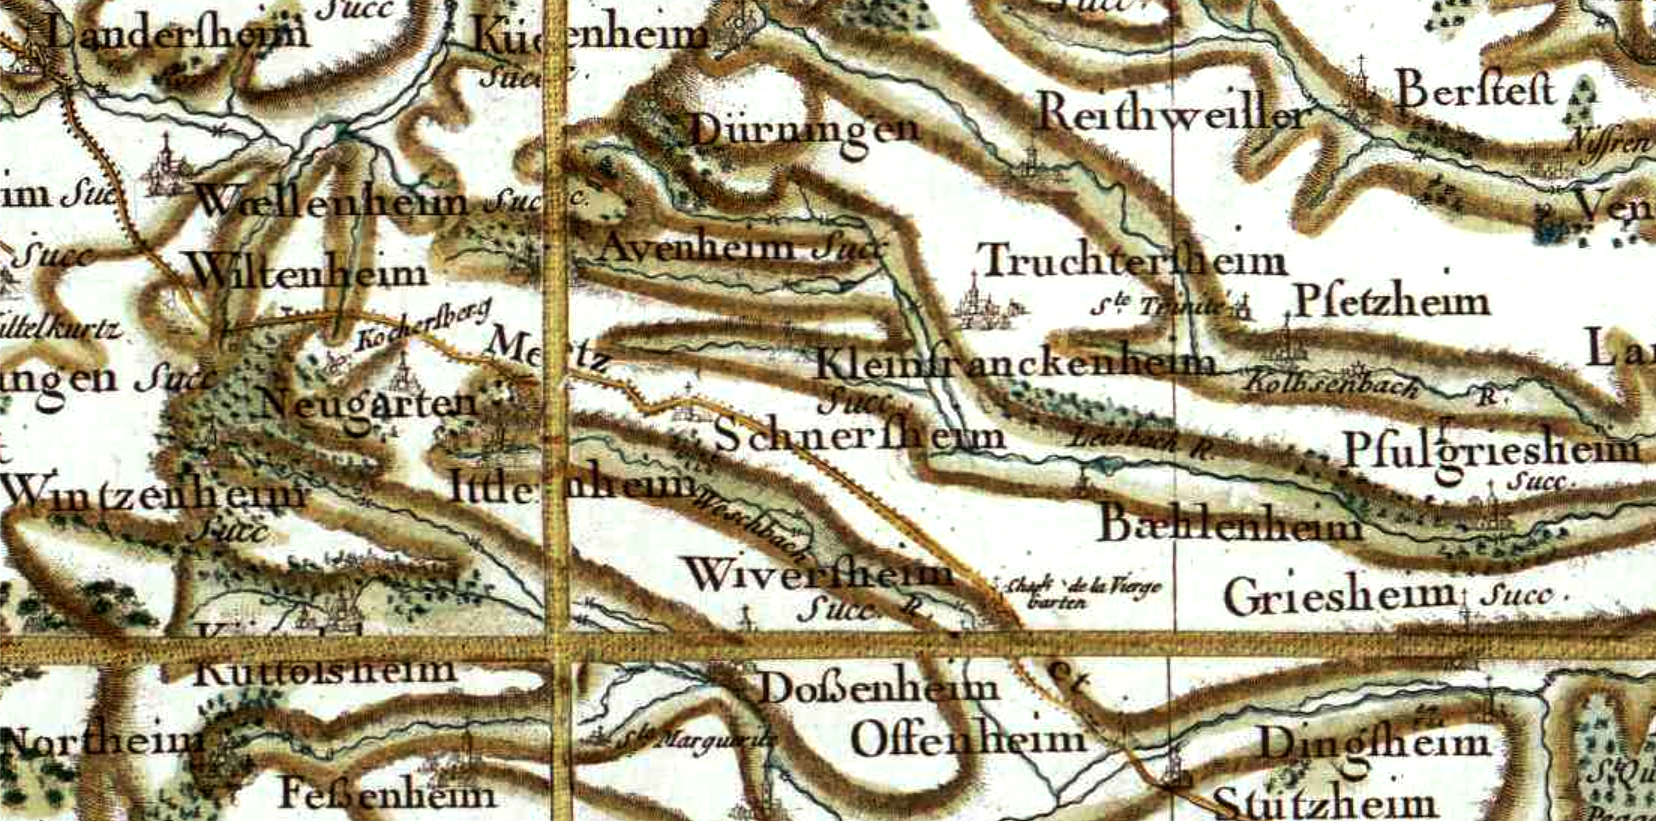 Schnersheim 67 cassini